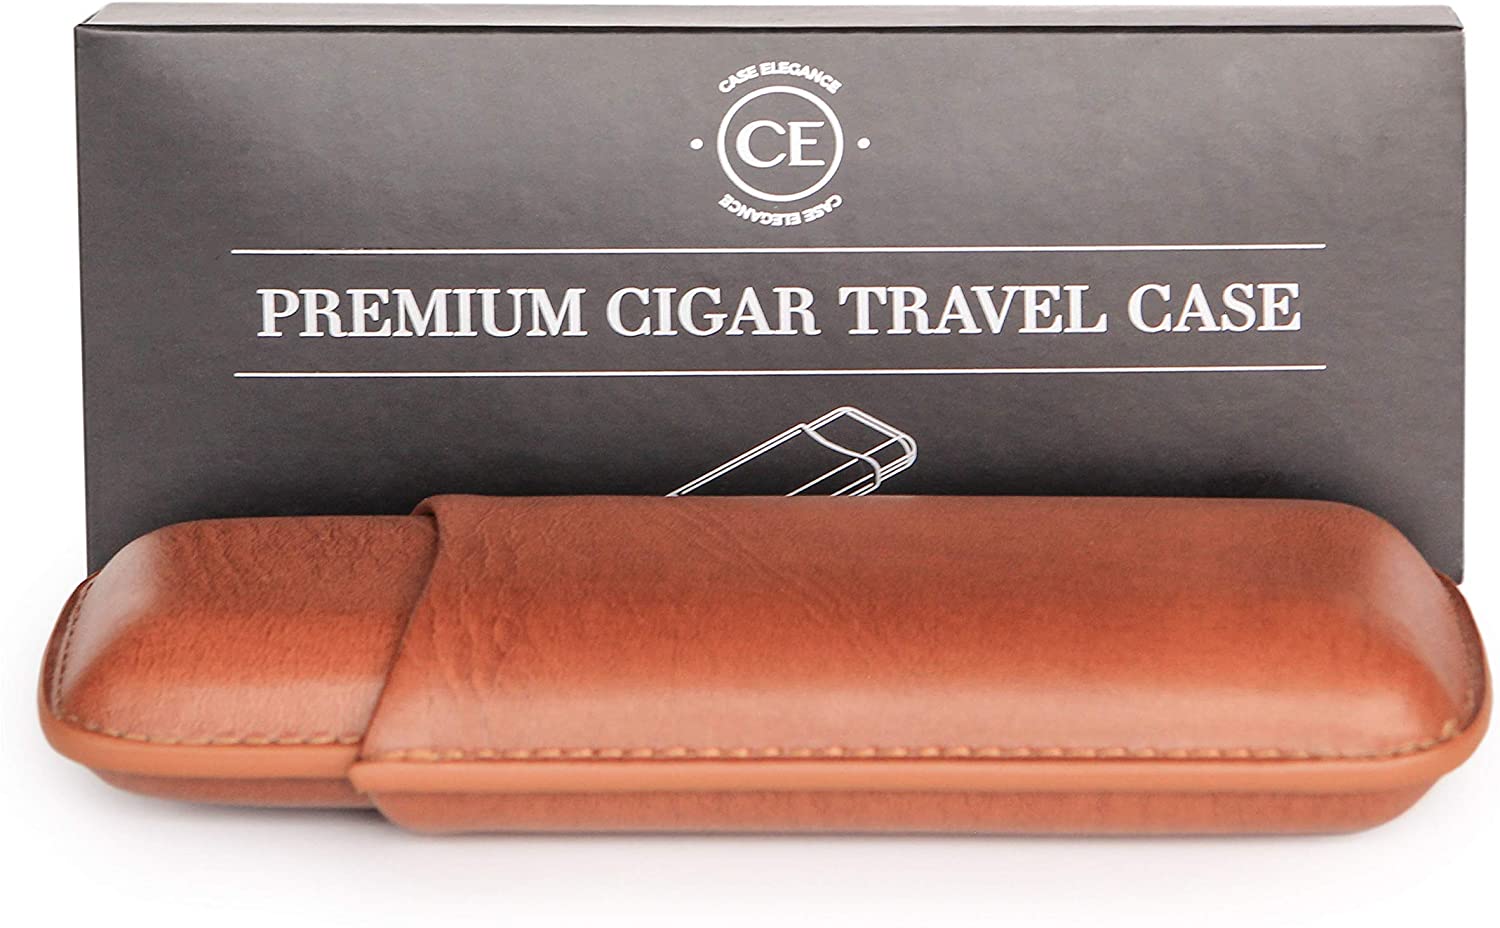 Klaro Accessory Bundle - Cigar Cutter, Torch Lighter and Travel Case by Case Elegance